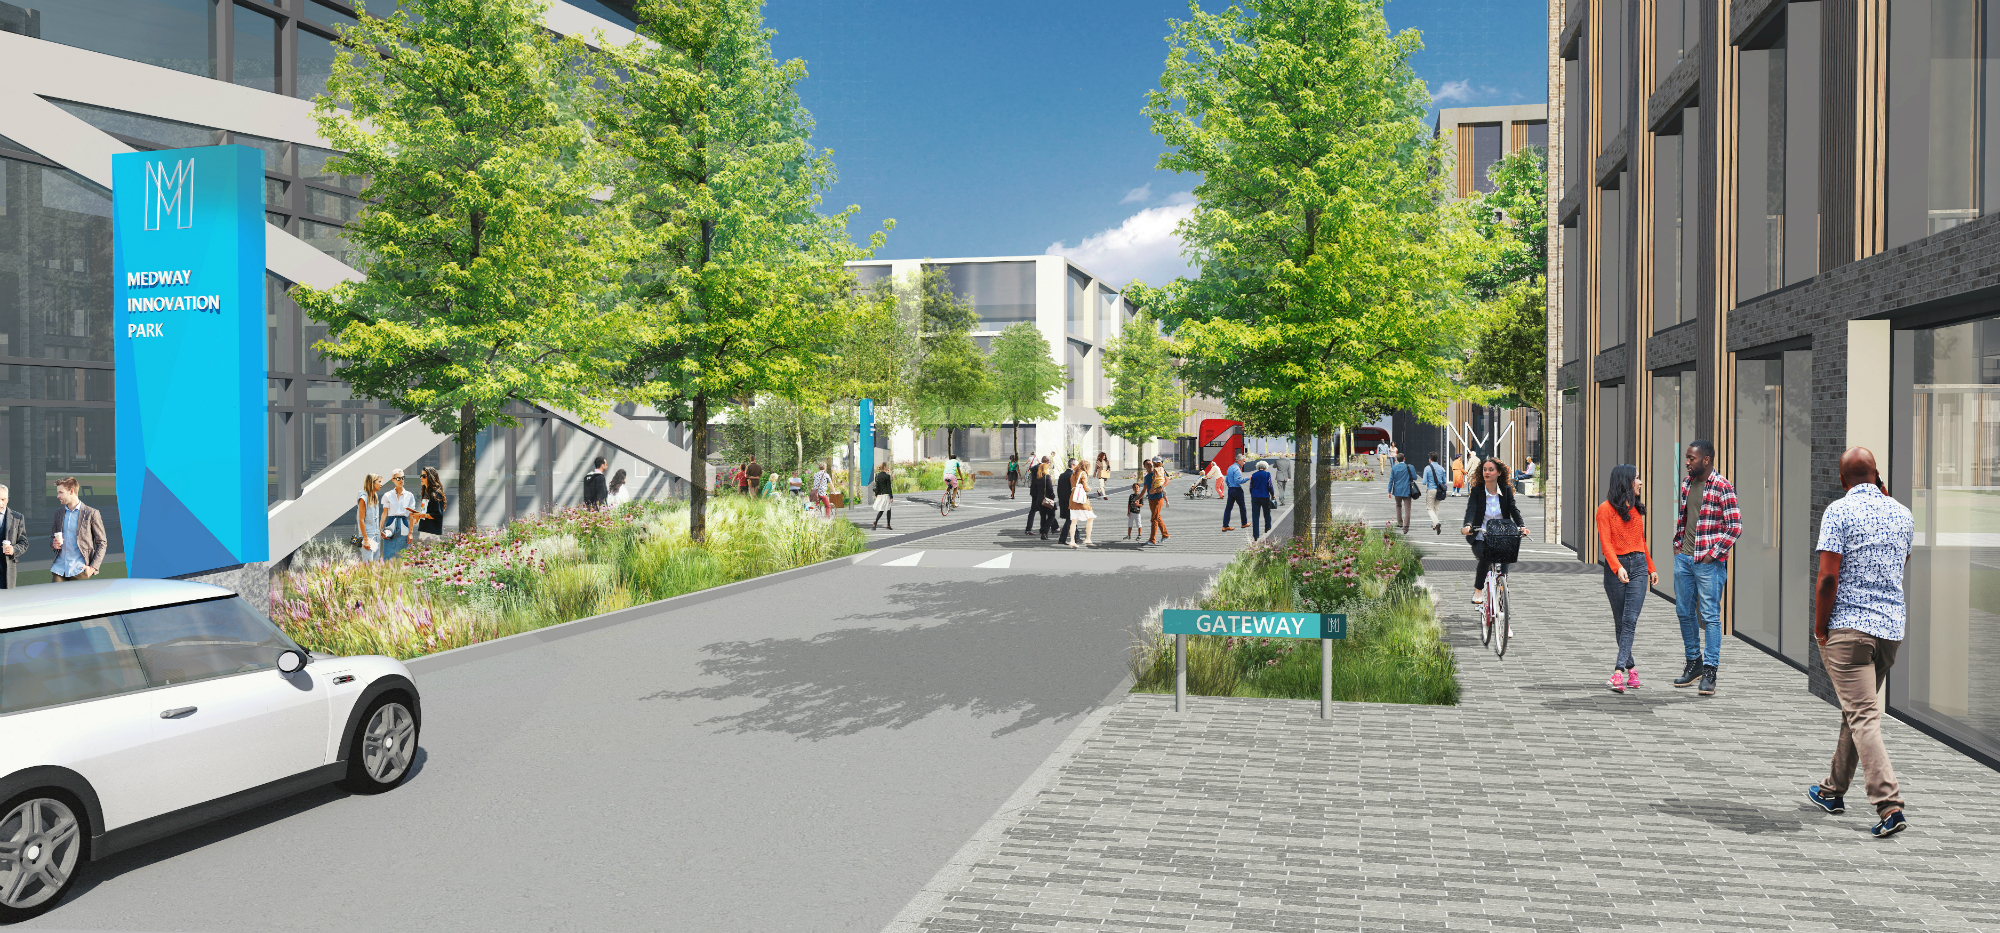 Innovation Park Medway vision